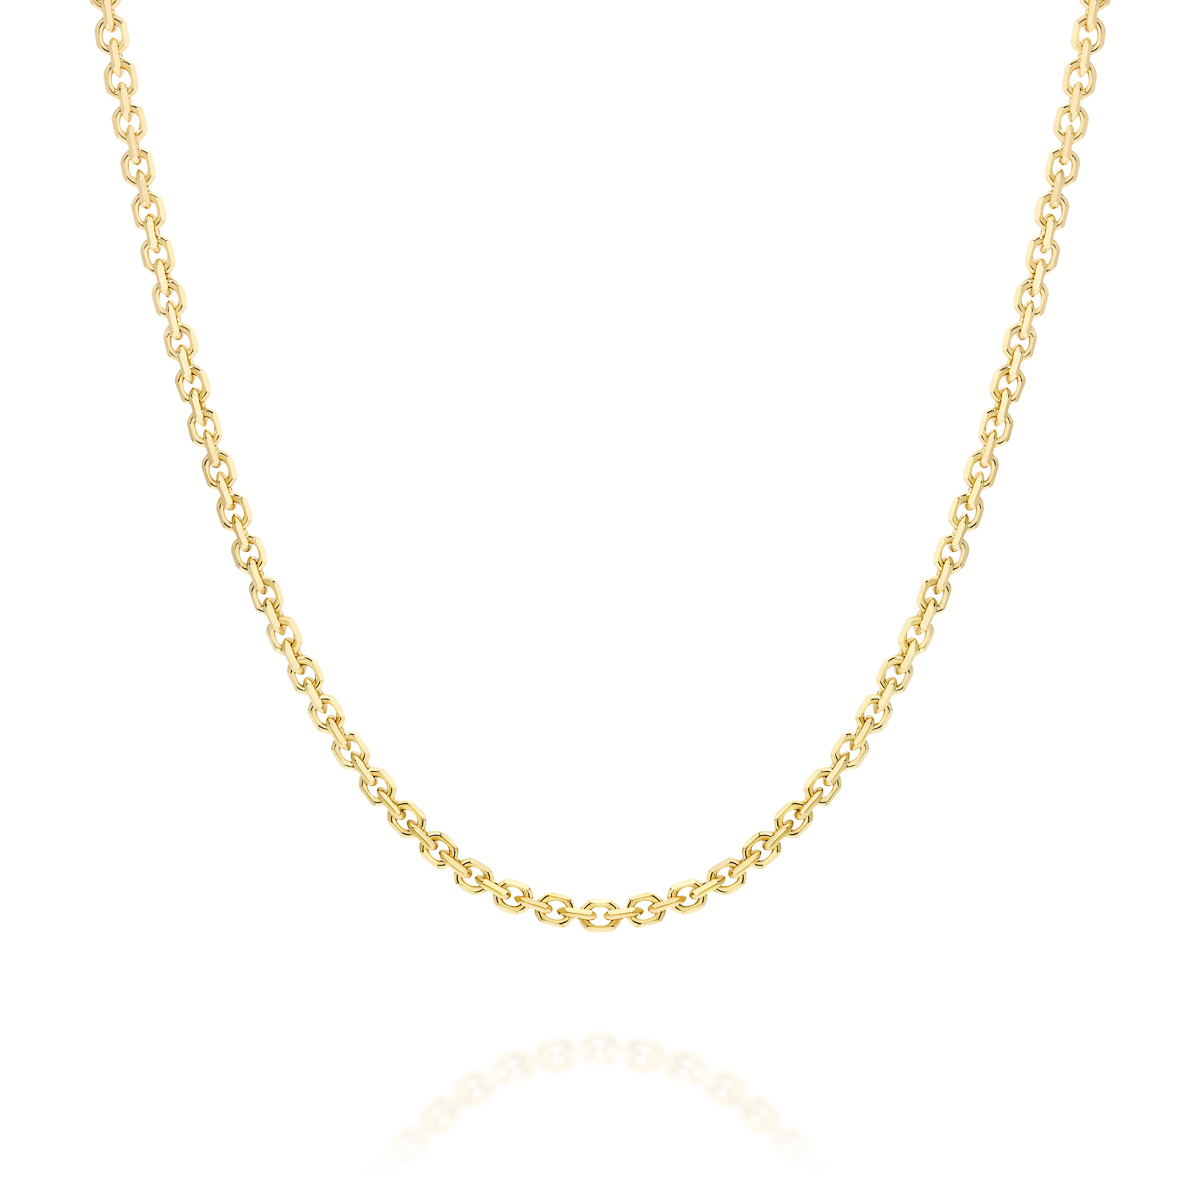 18K Yellow Gold Oval Link Diamond Cut Chain - Small | FD035 YG